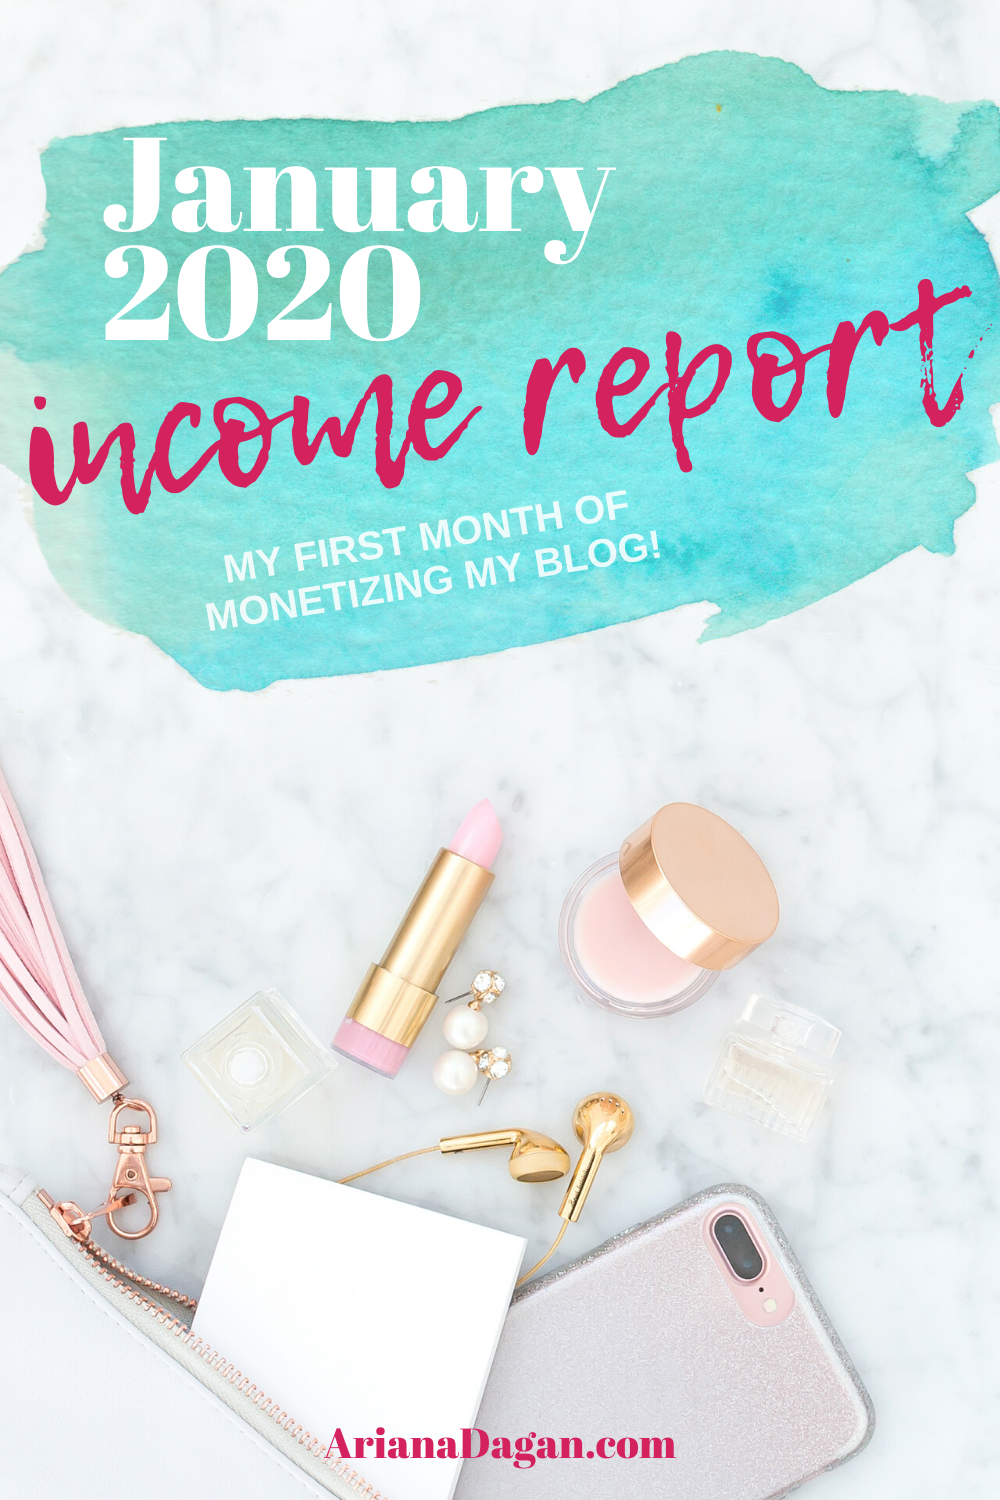 January 2020 Blog Income Report